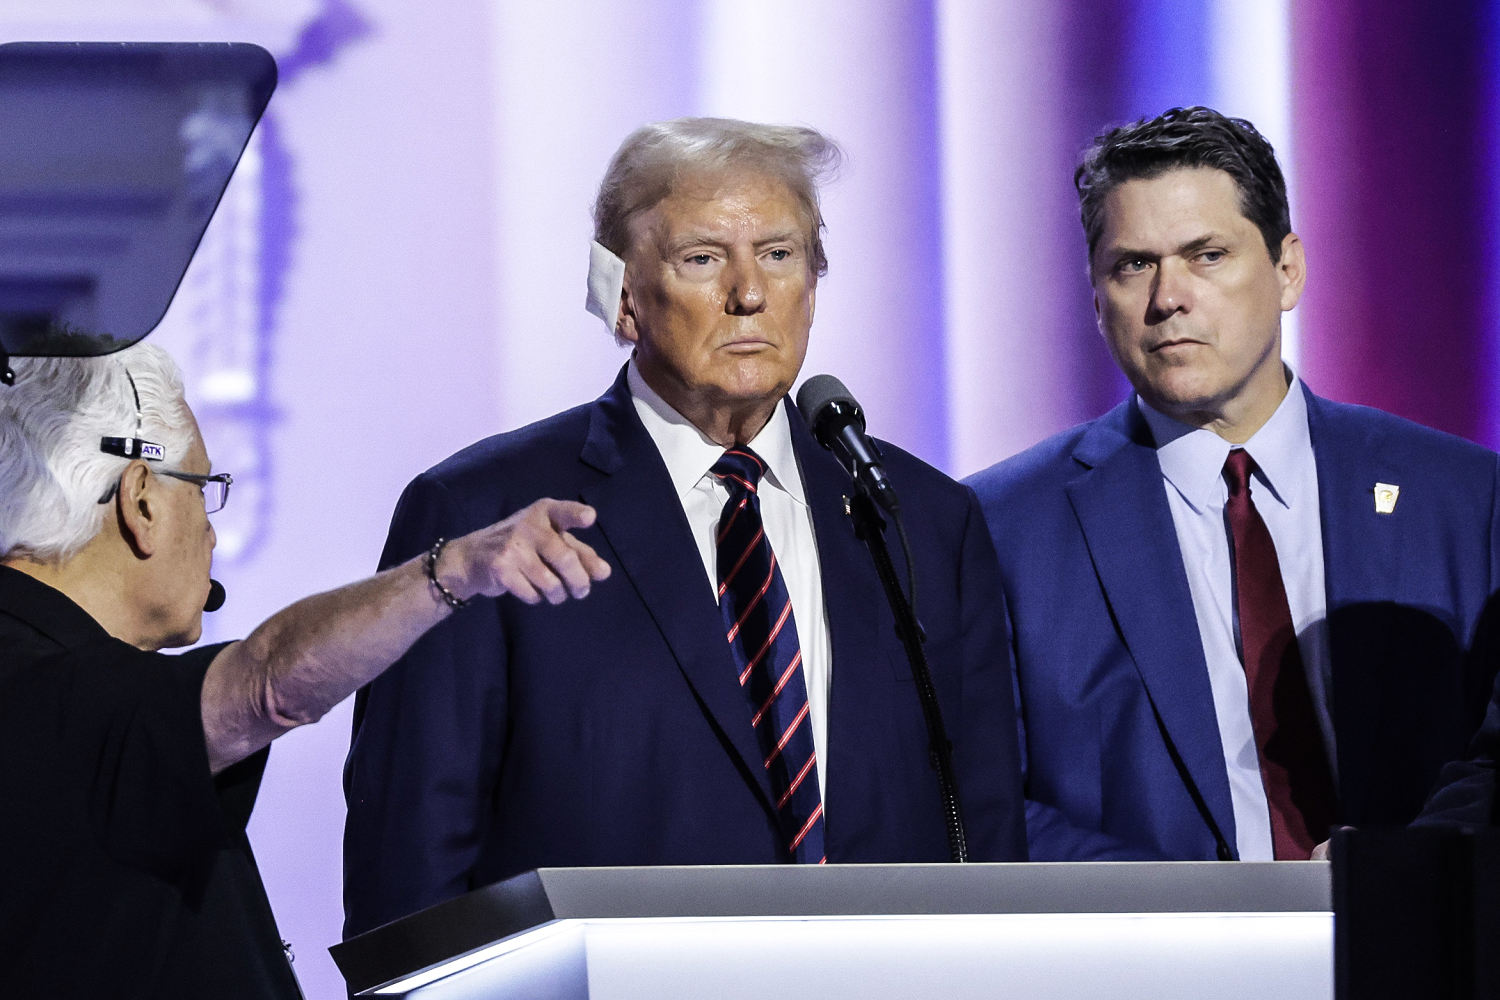 Trump campaign edits GOP convention speeches to tone down political rhetoric